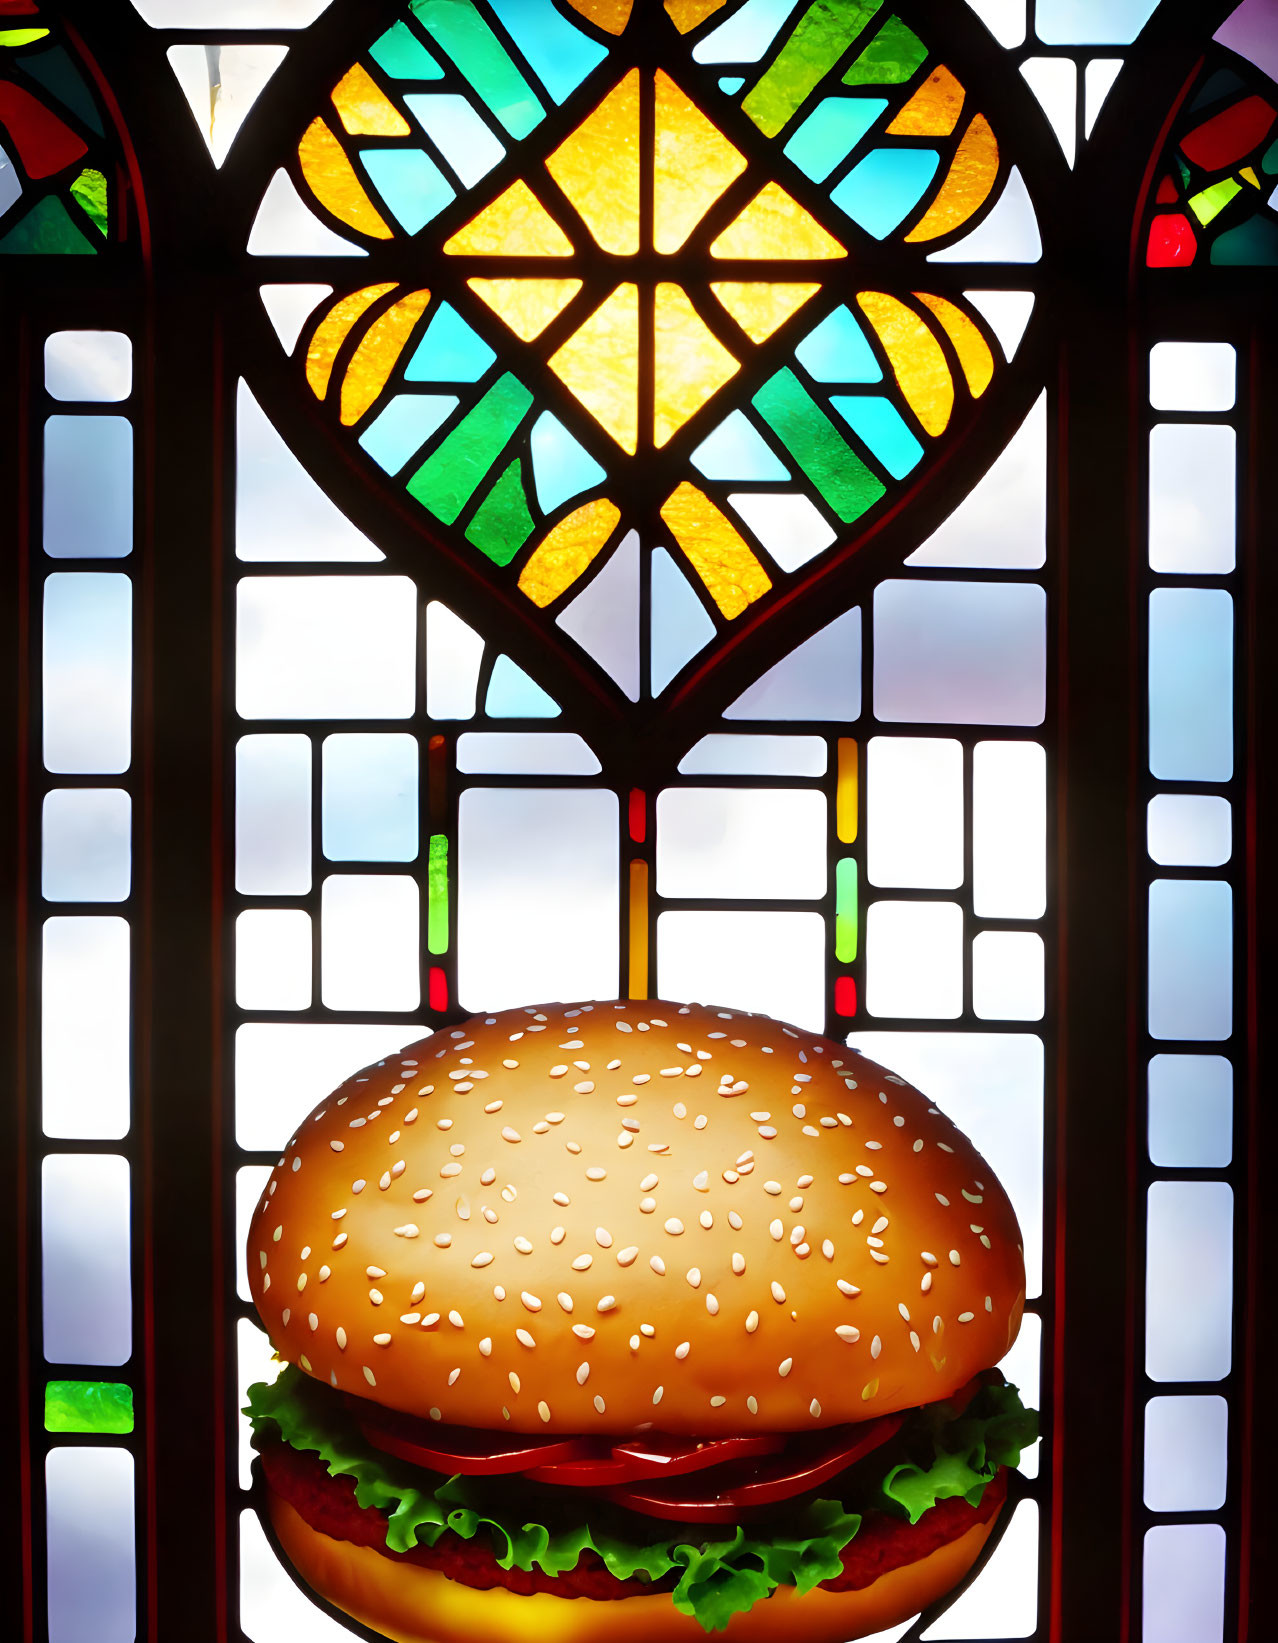 The Church of the Hamburger